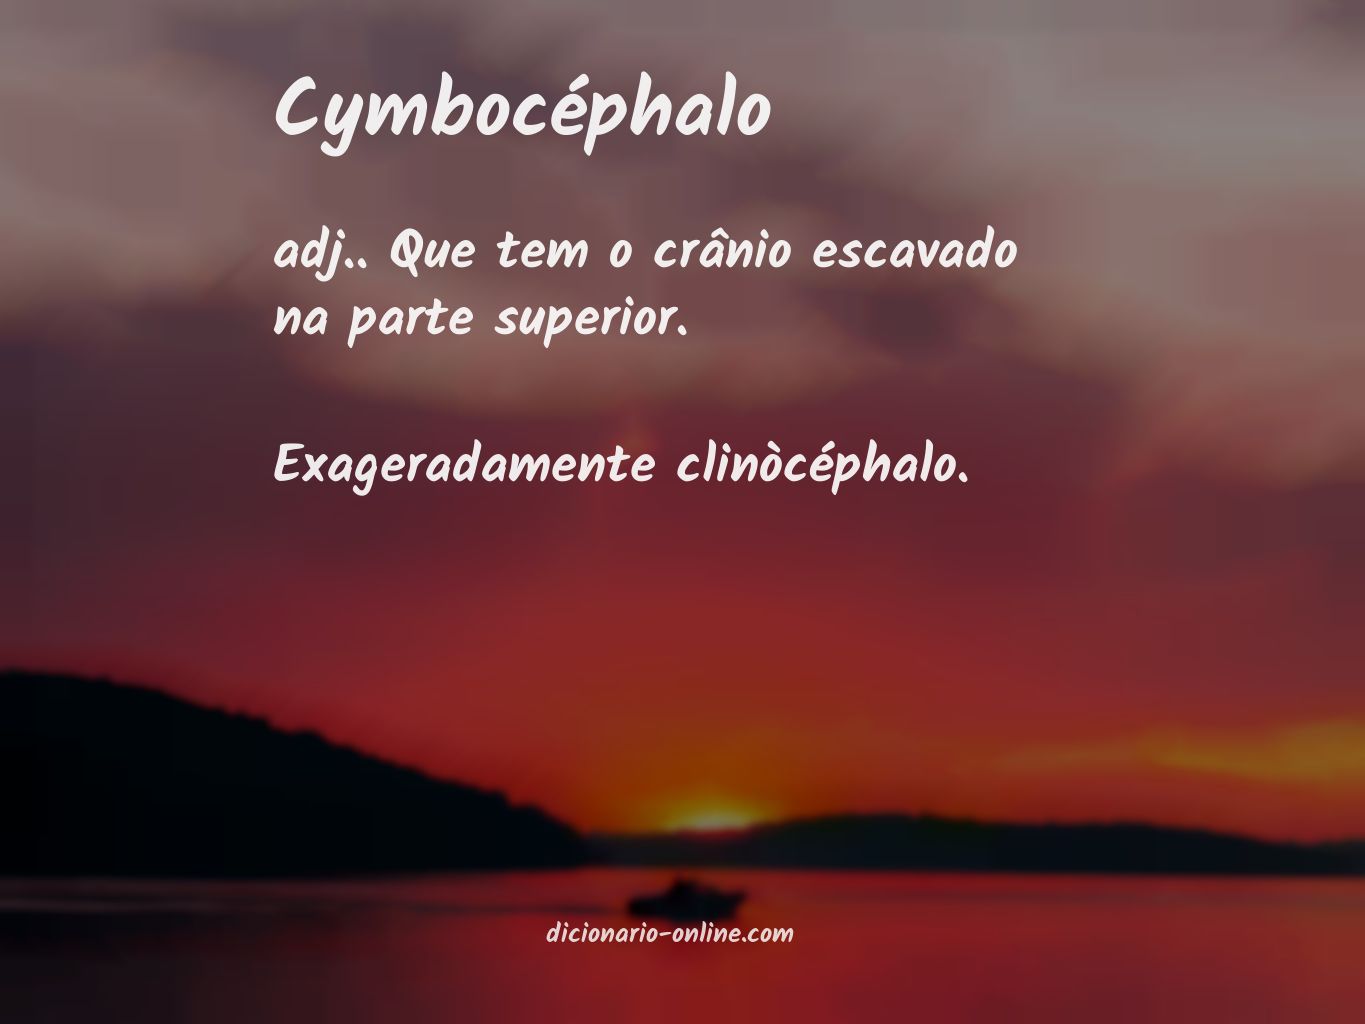 Significado de cymbocéphalo